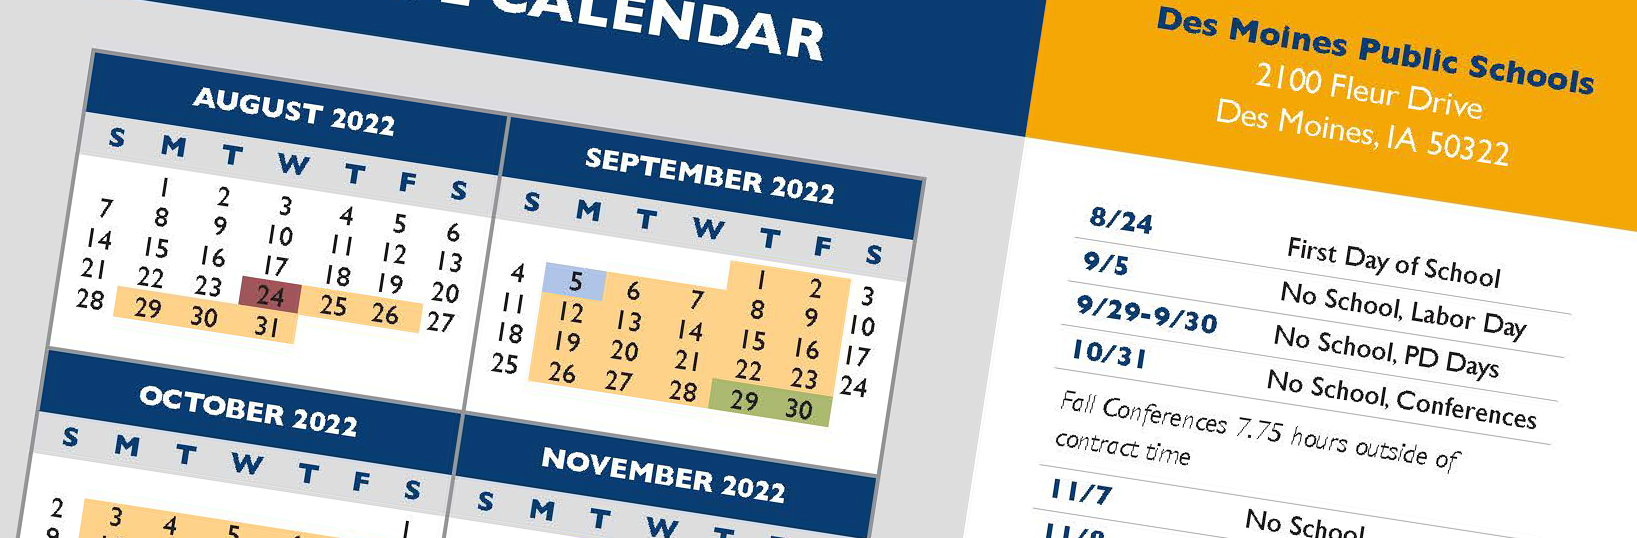 Share Your Input on 2023-24 School Calendar Proposals